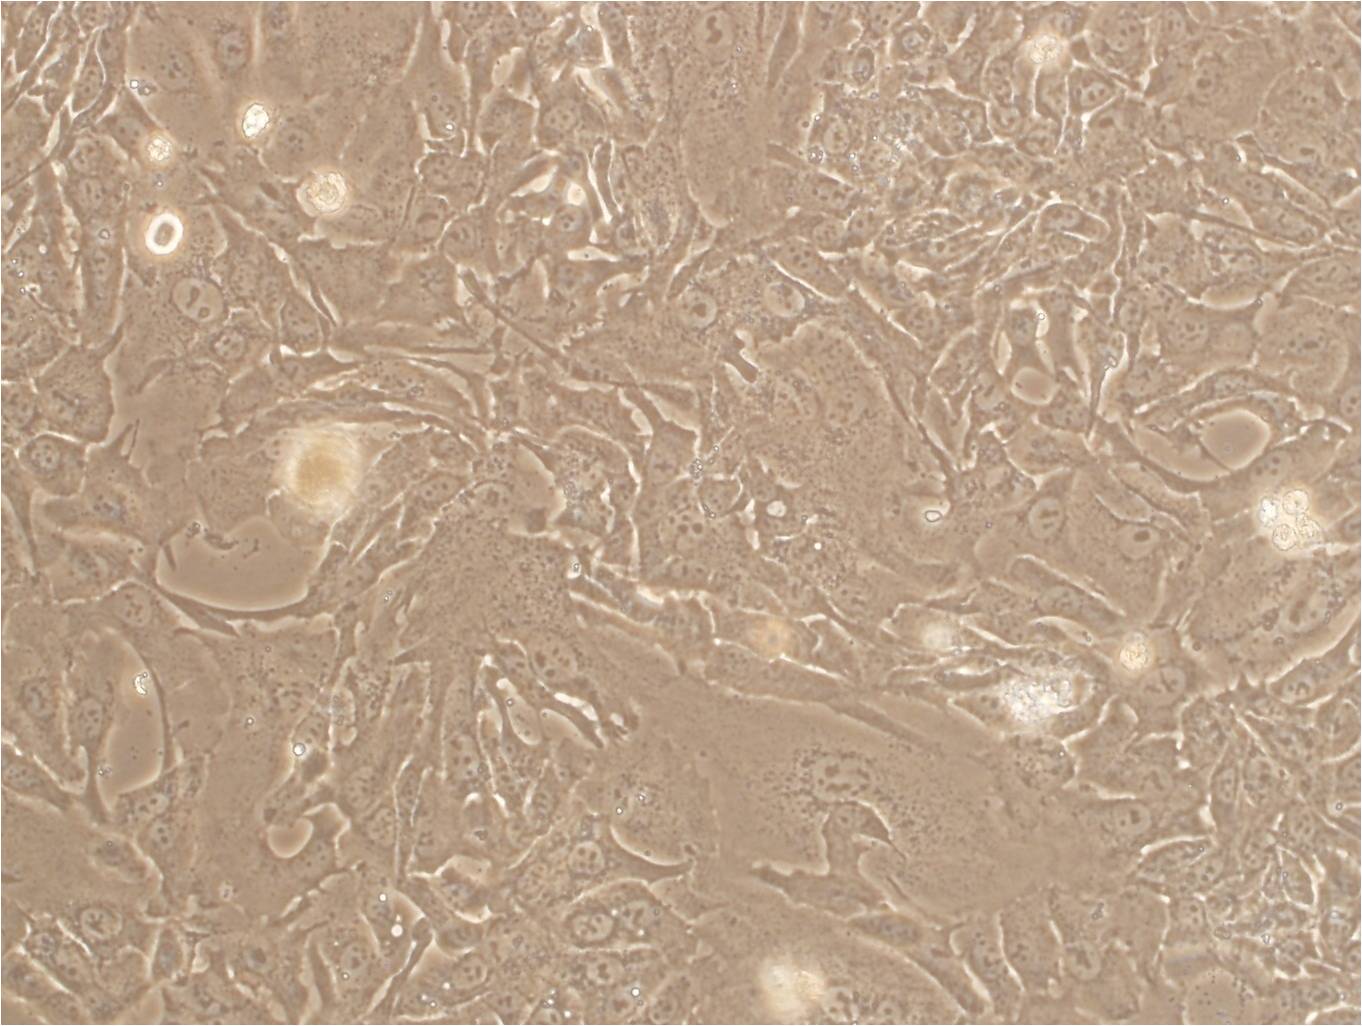 LS174T cell line人结直肠腺癌细胞系